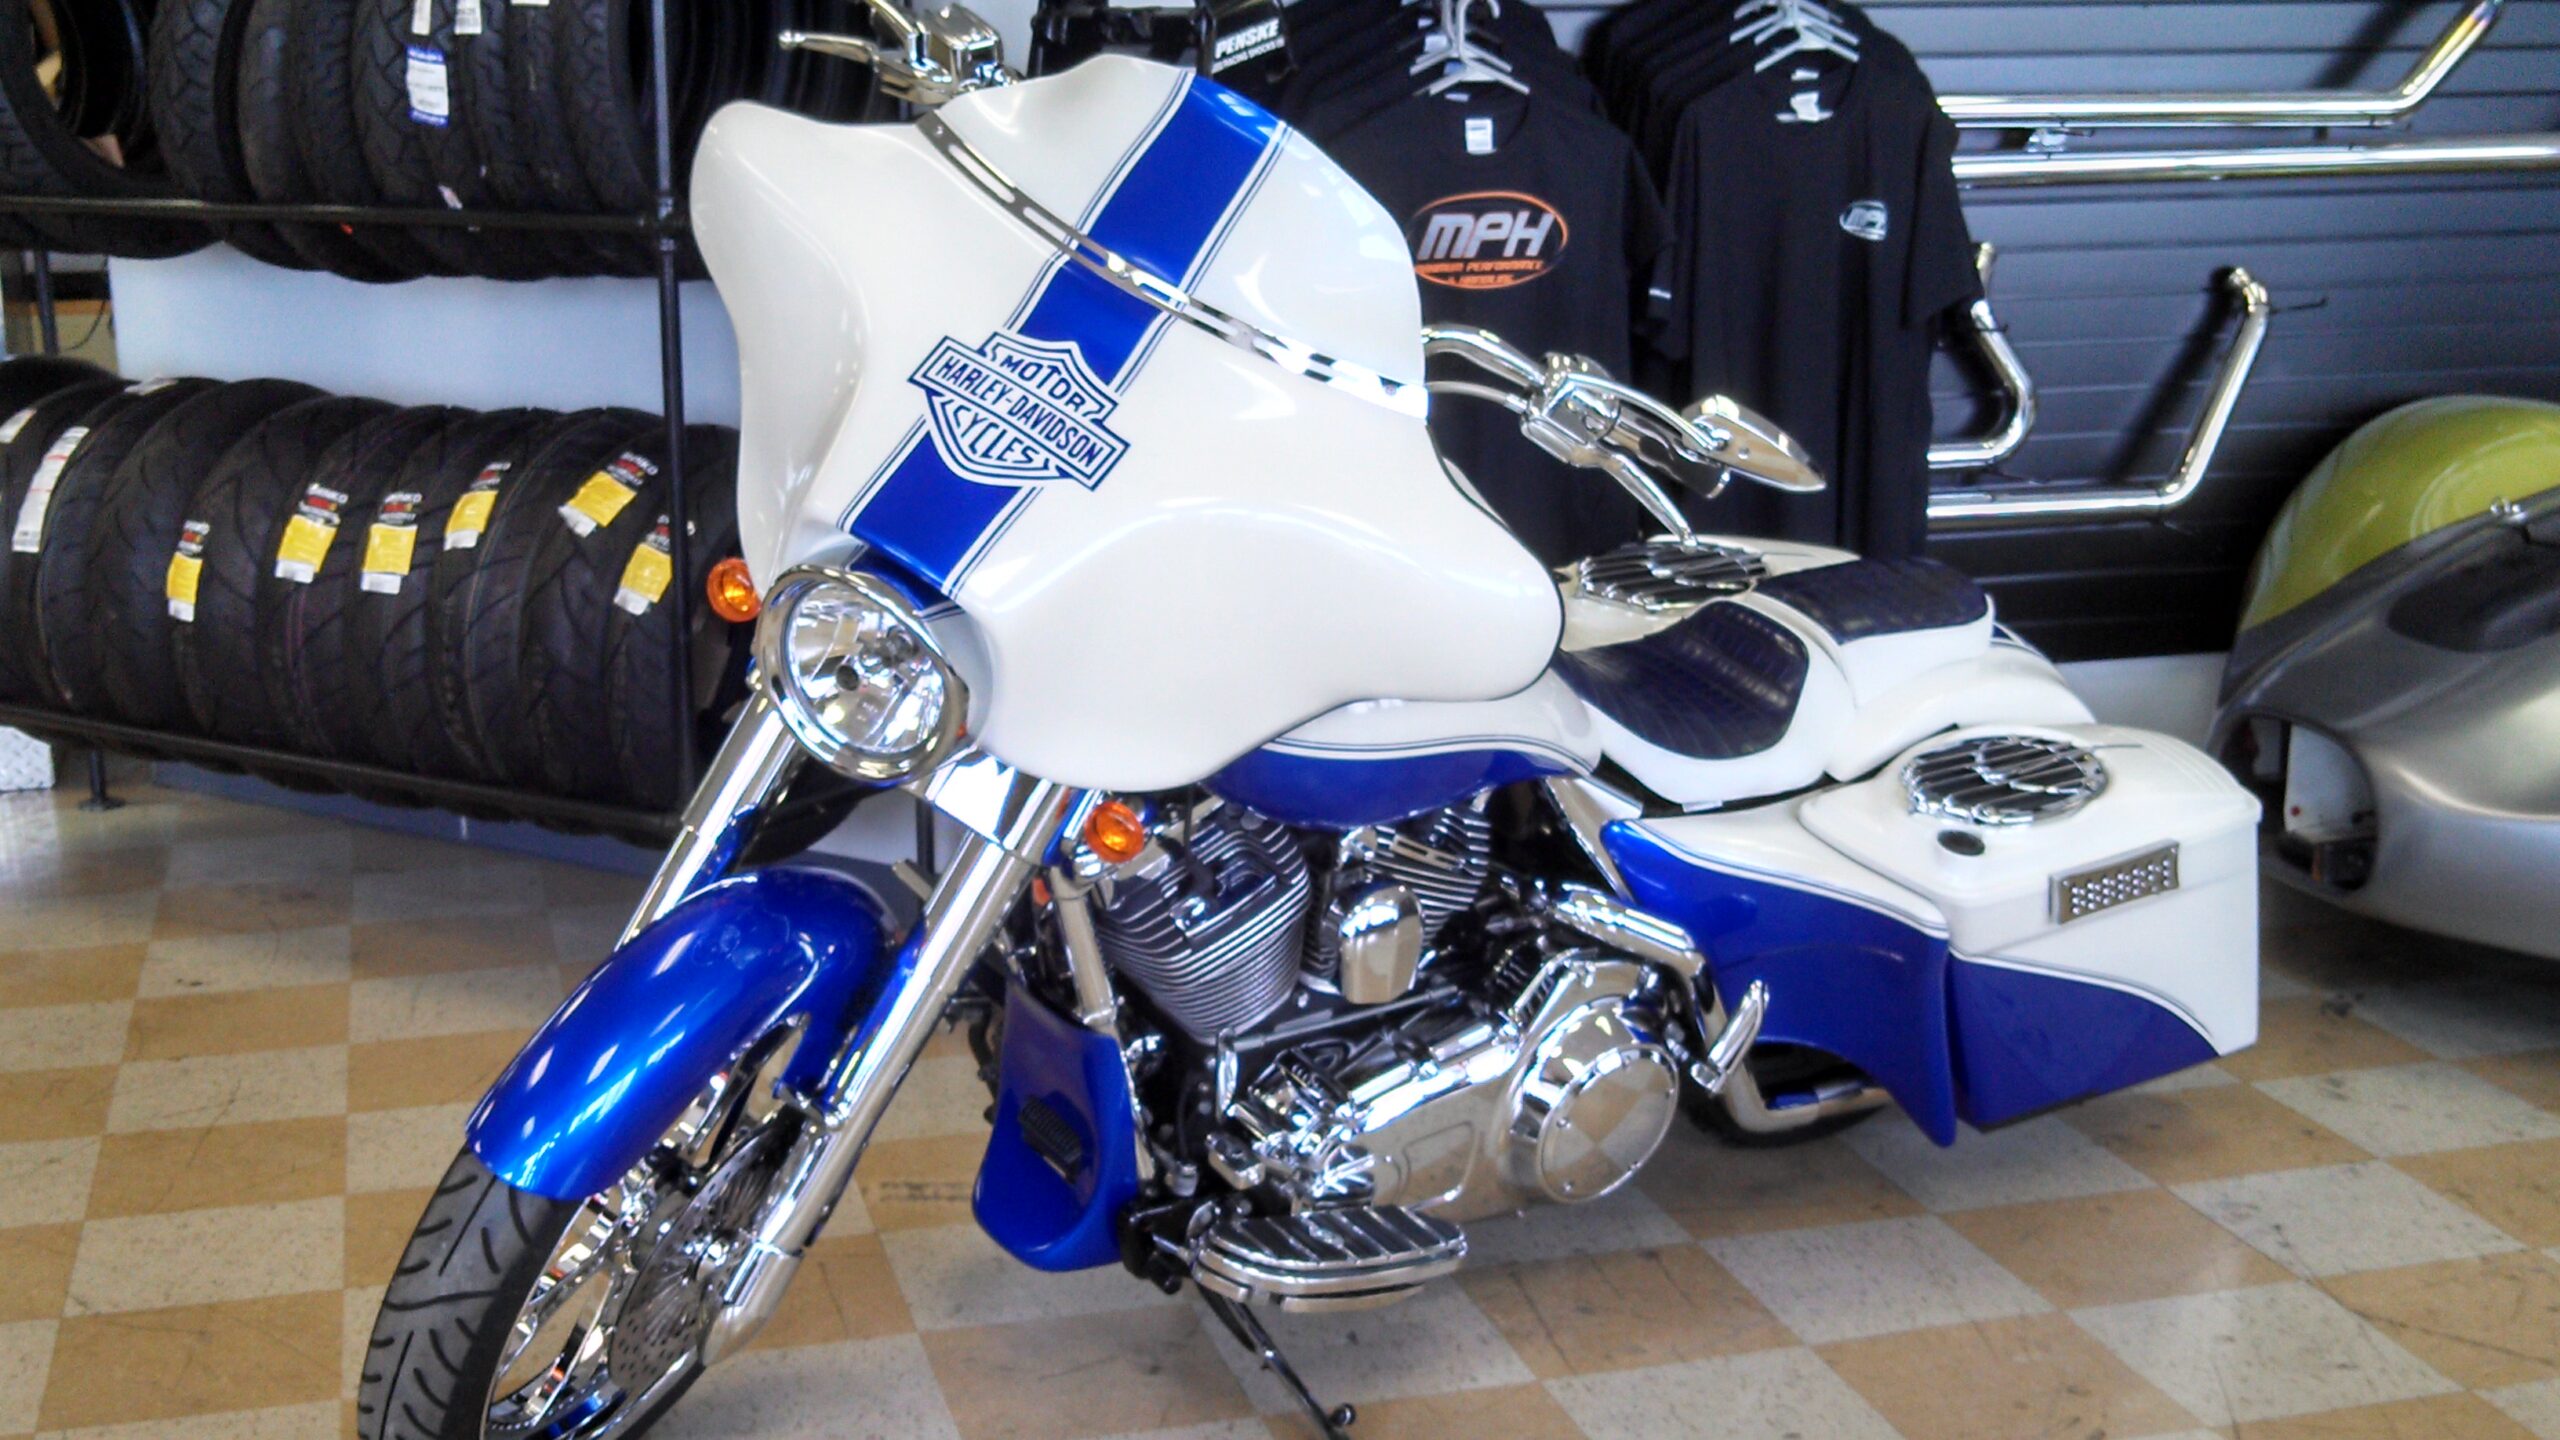 A blue and white colored Motor Harley Davidson bike